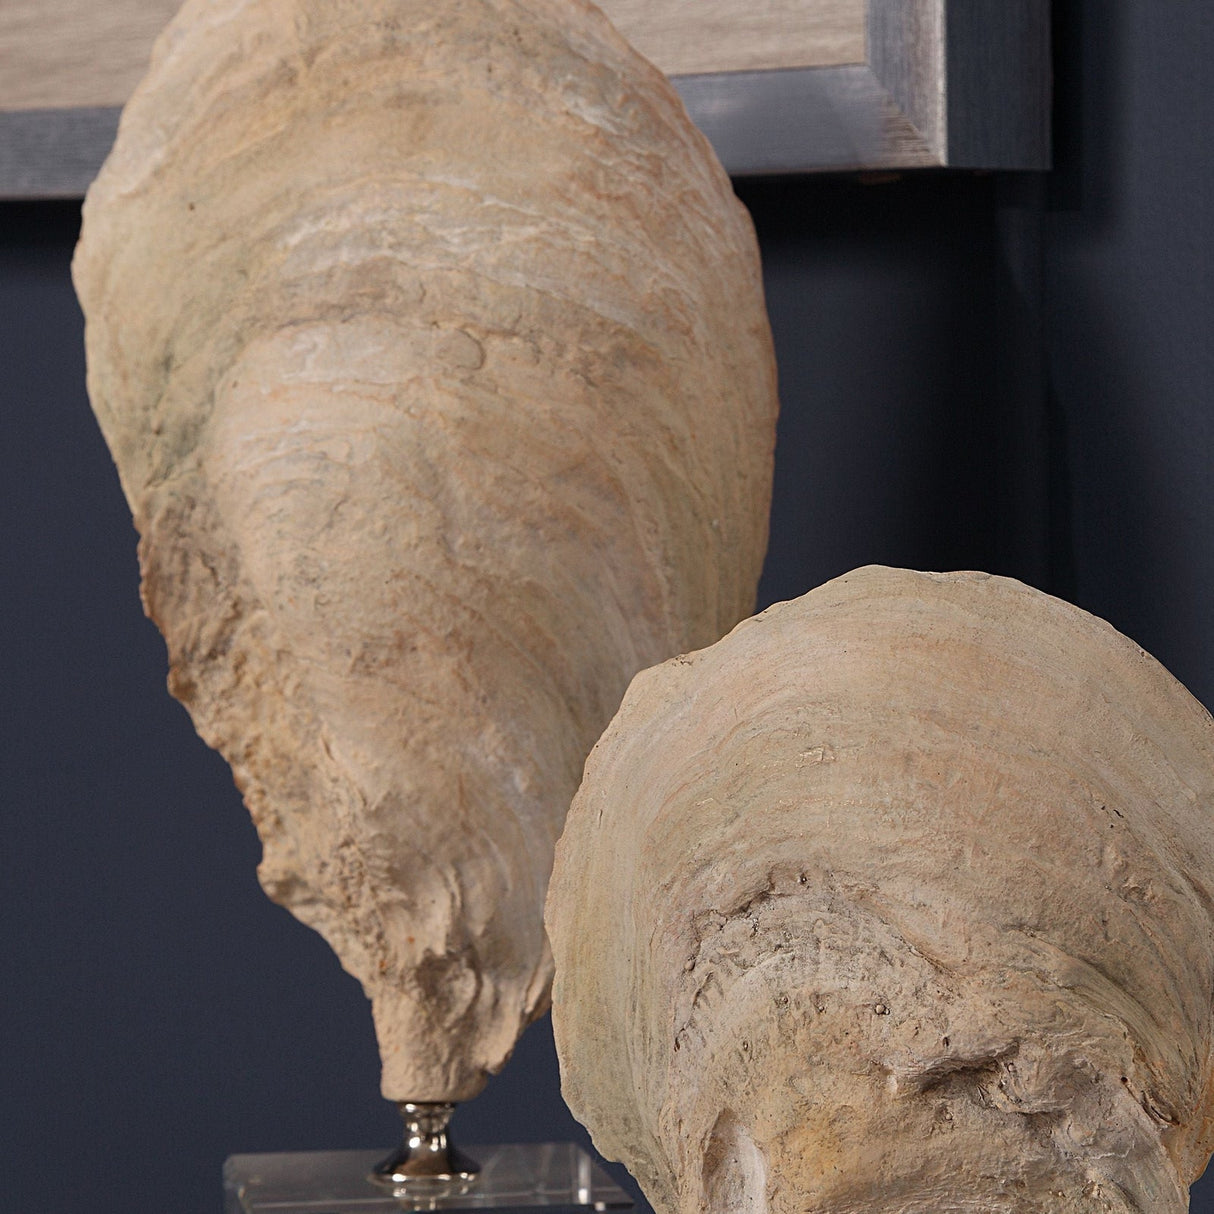 Uttermost Oyster Shell Sculptures - Set Of 2 - Home Elegance USA